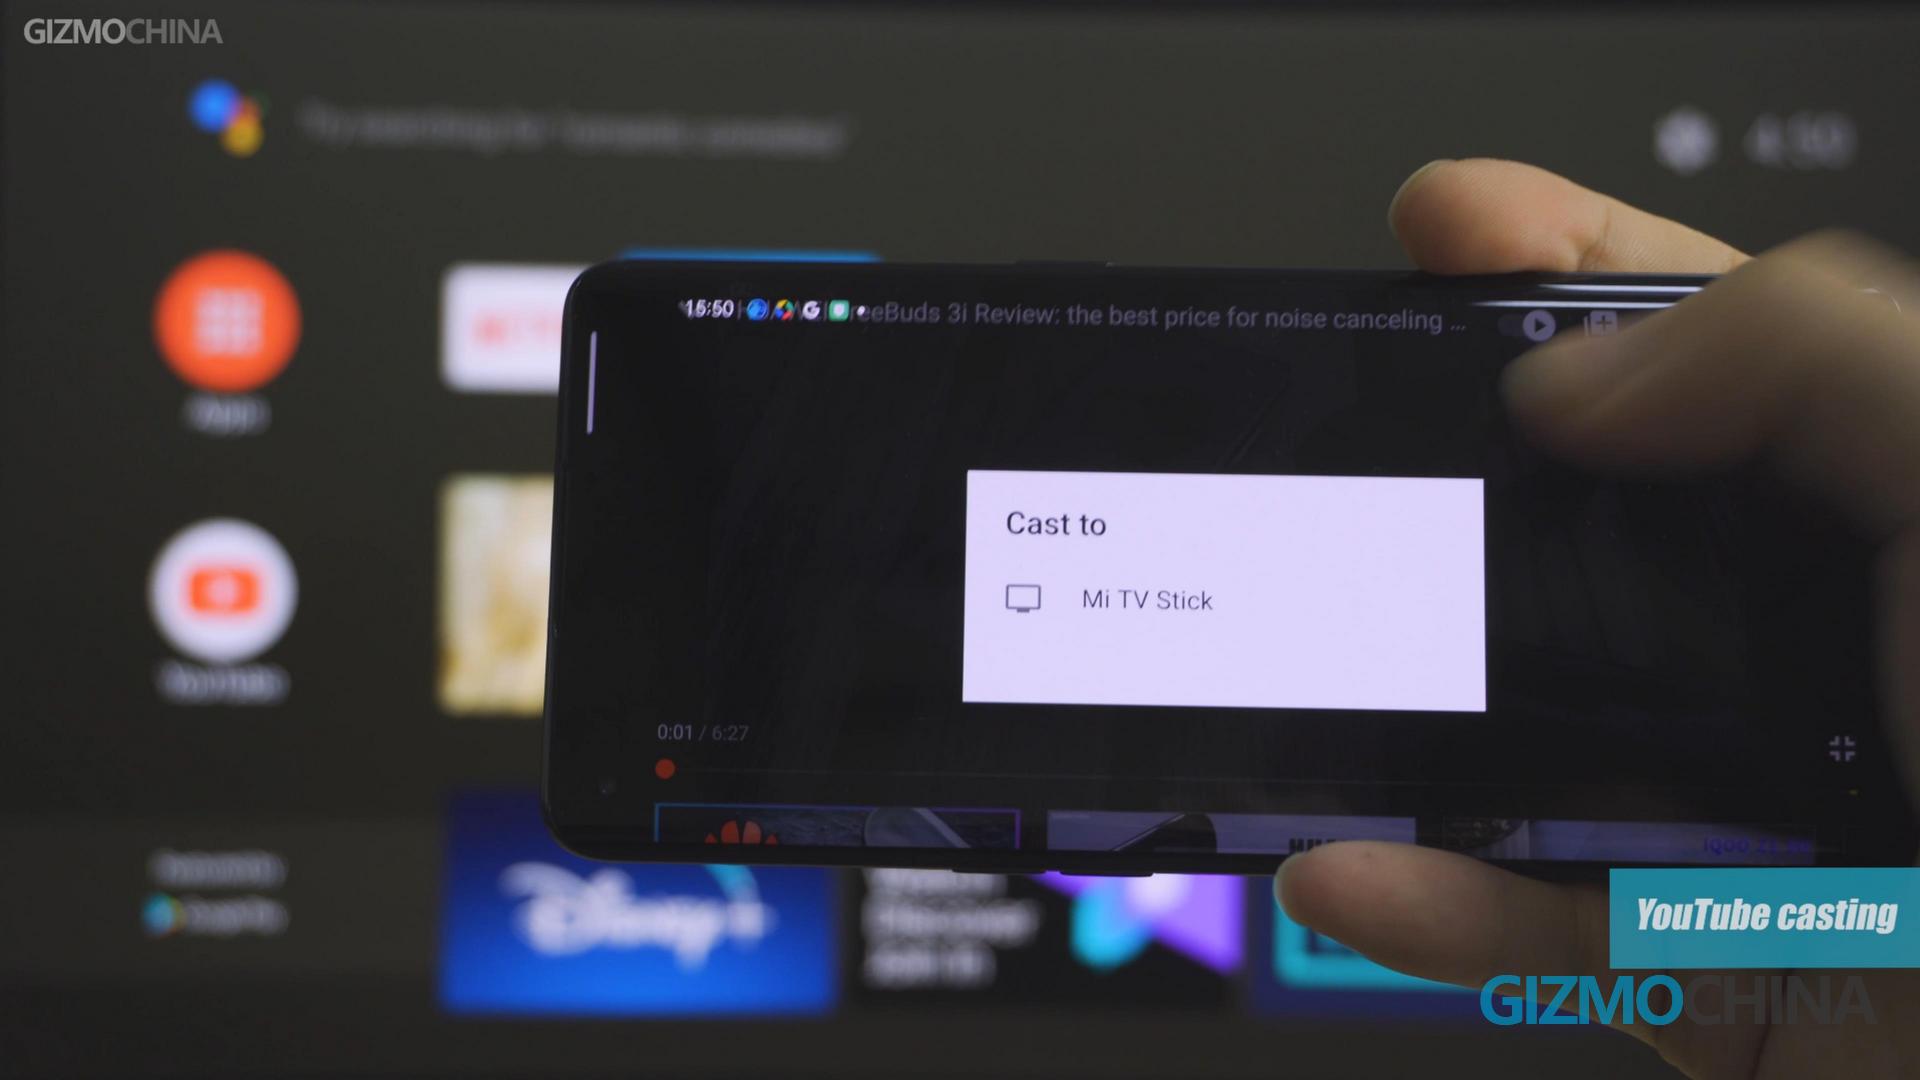 Xiaomi Mi TV Stick review: An affordable way to convert a regular